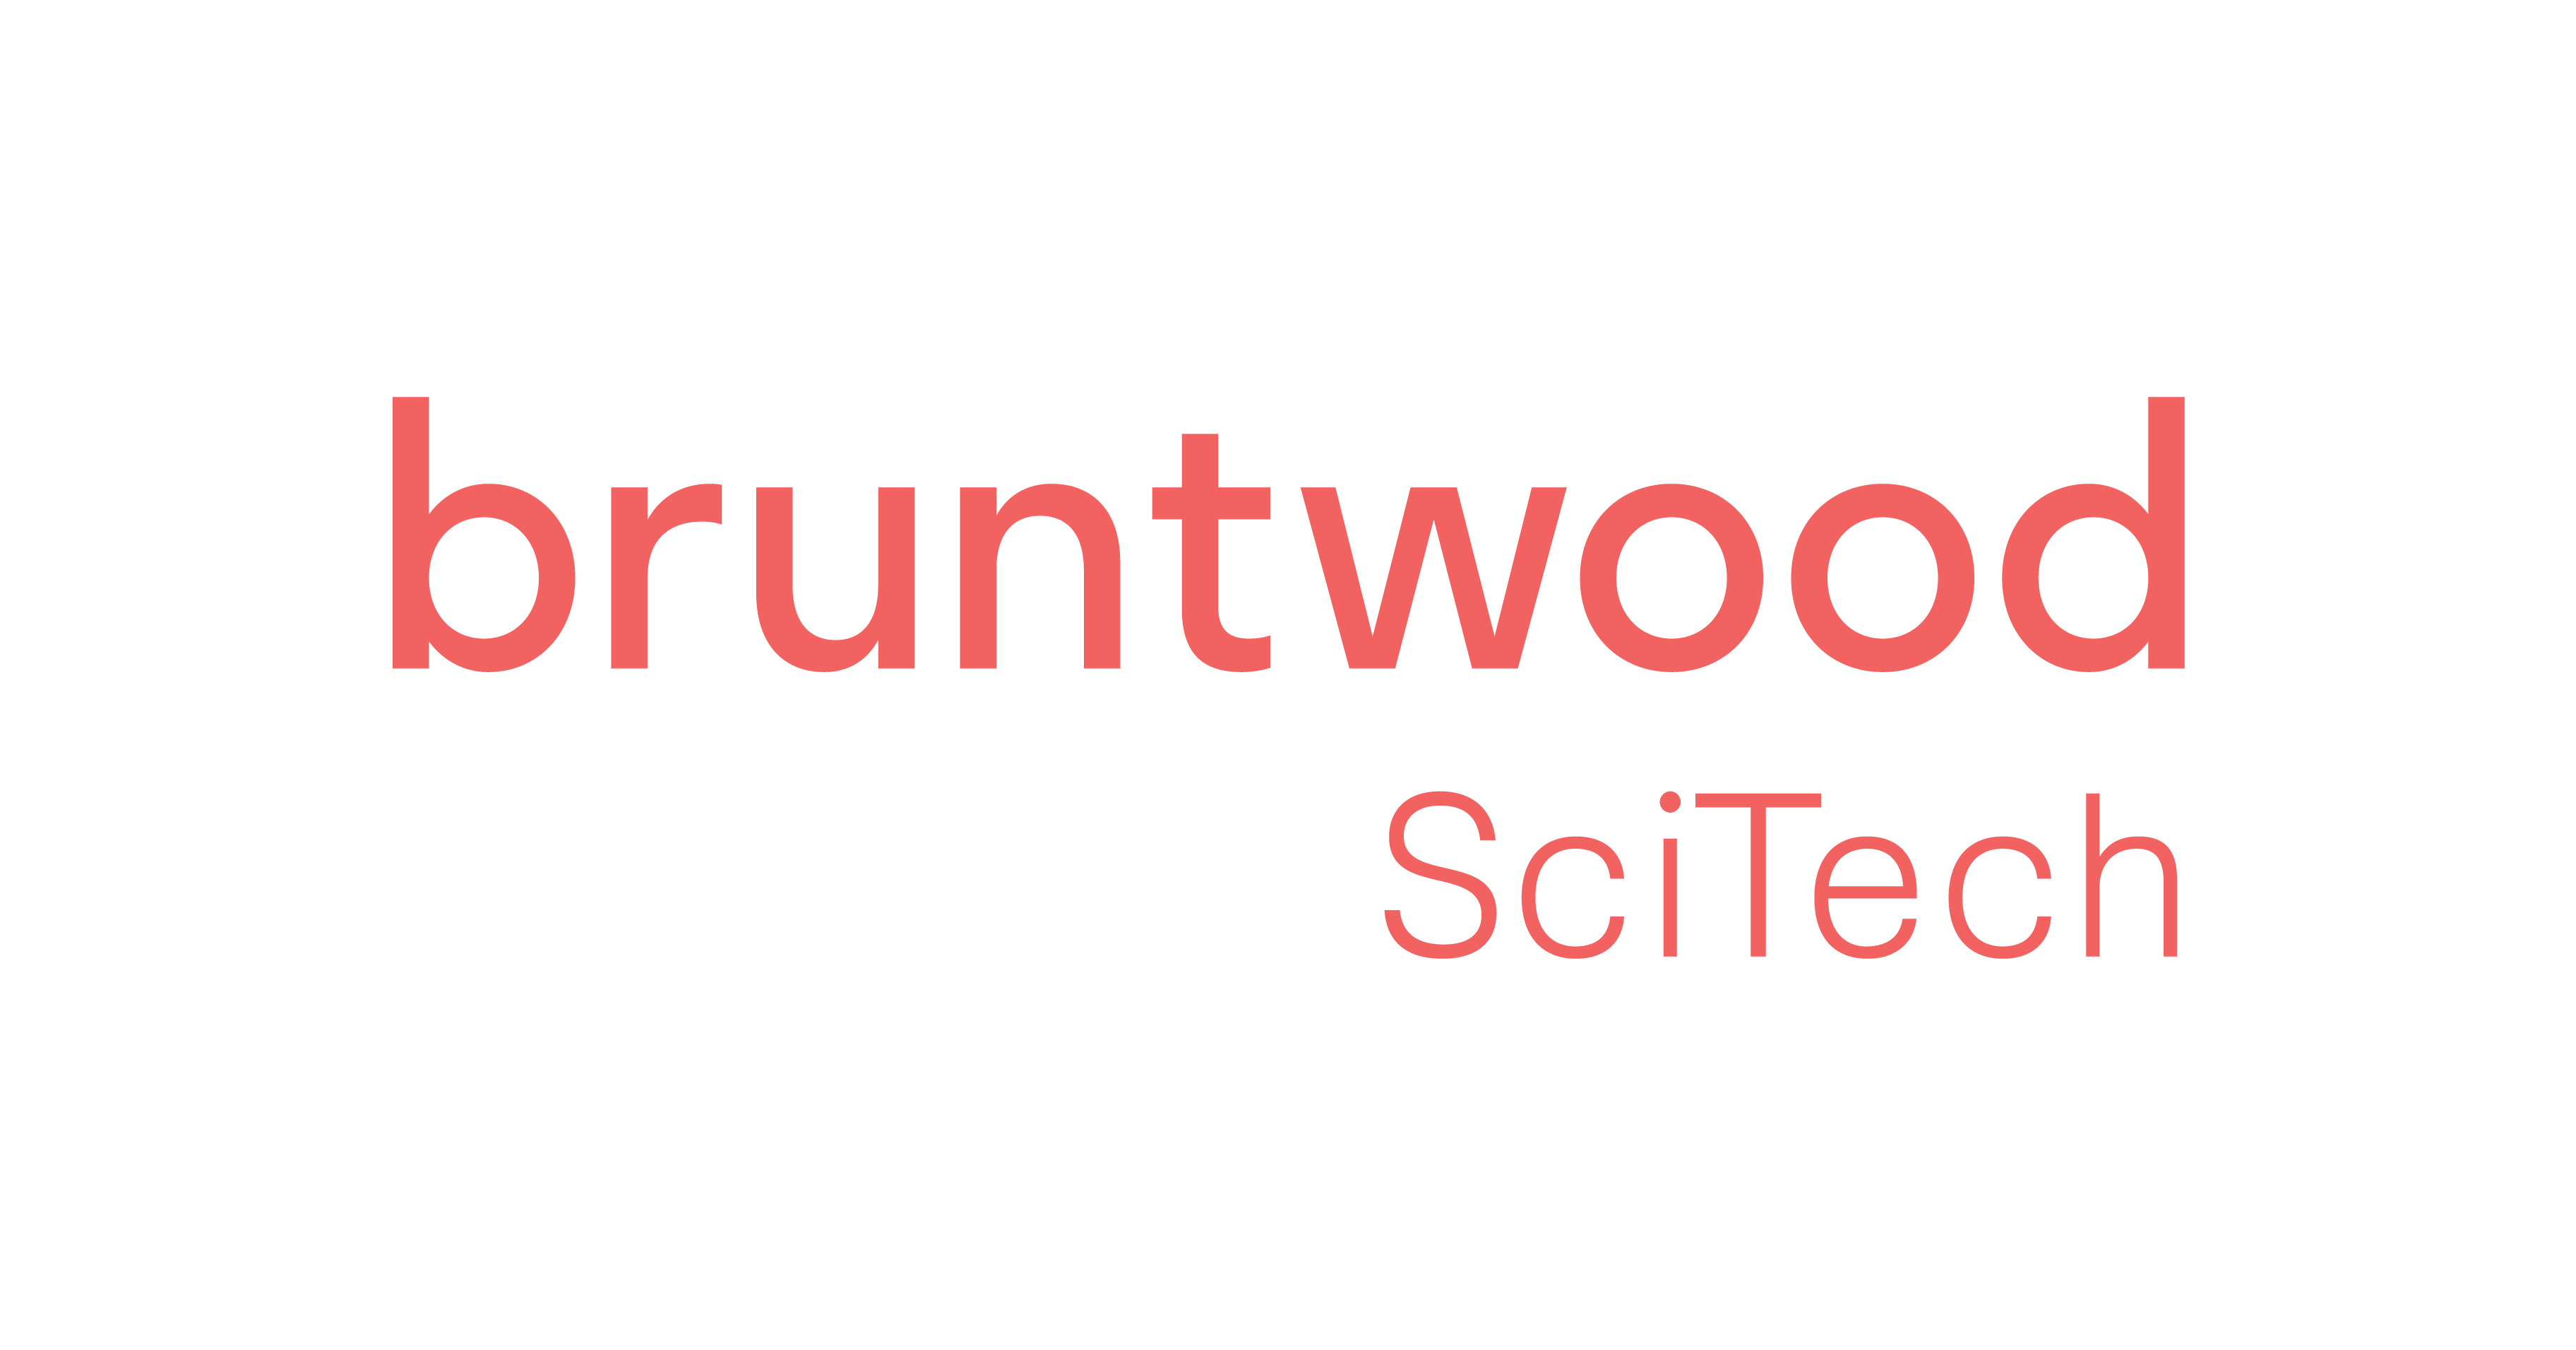 Bruntowood scitech logo